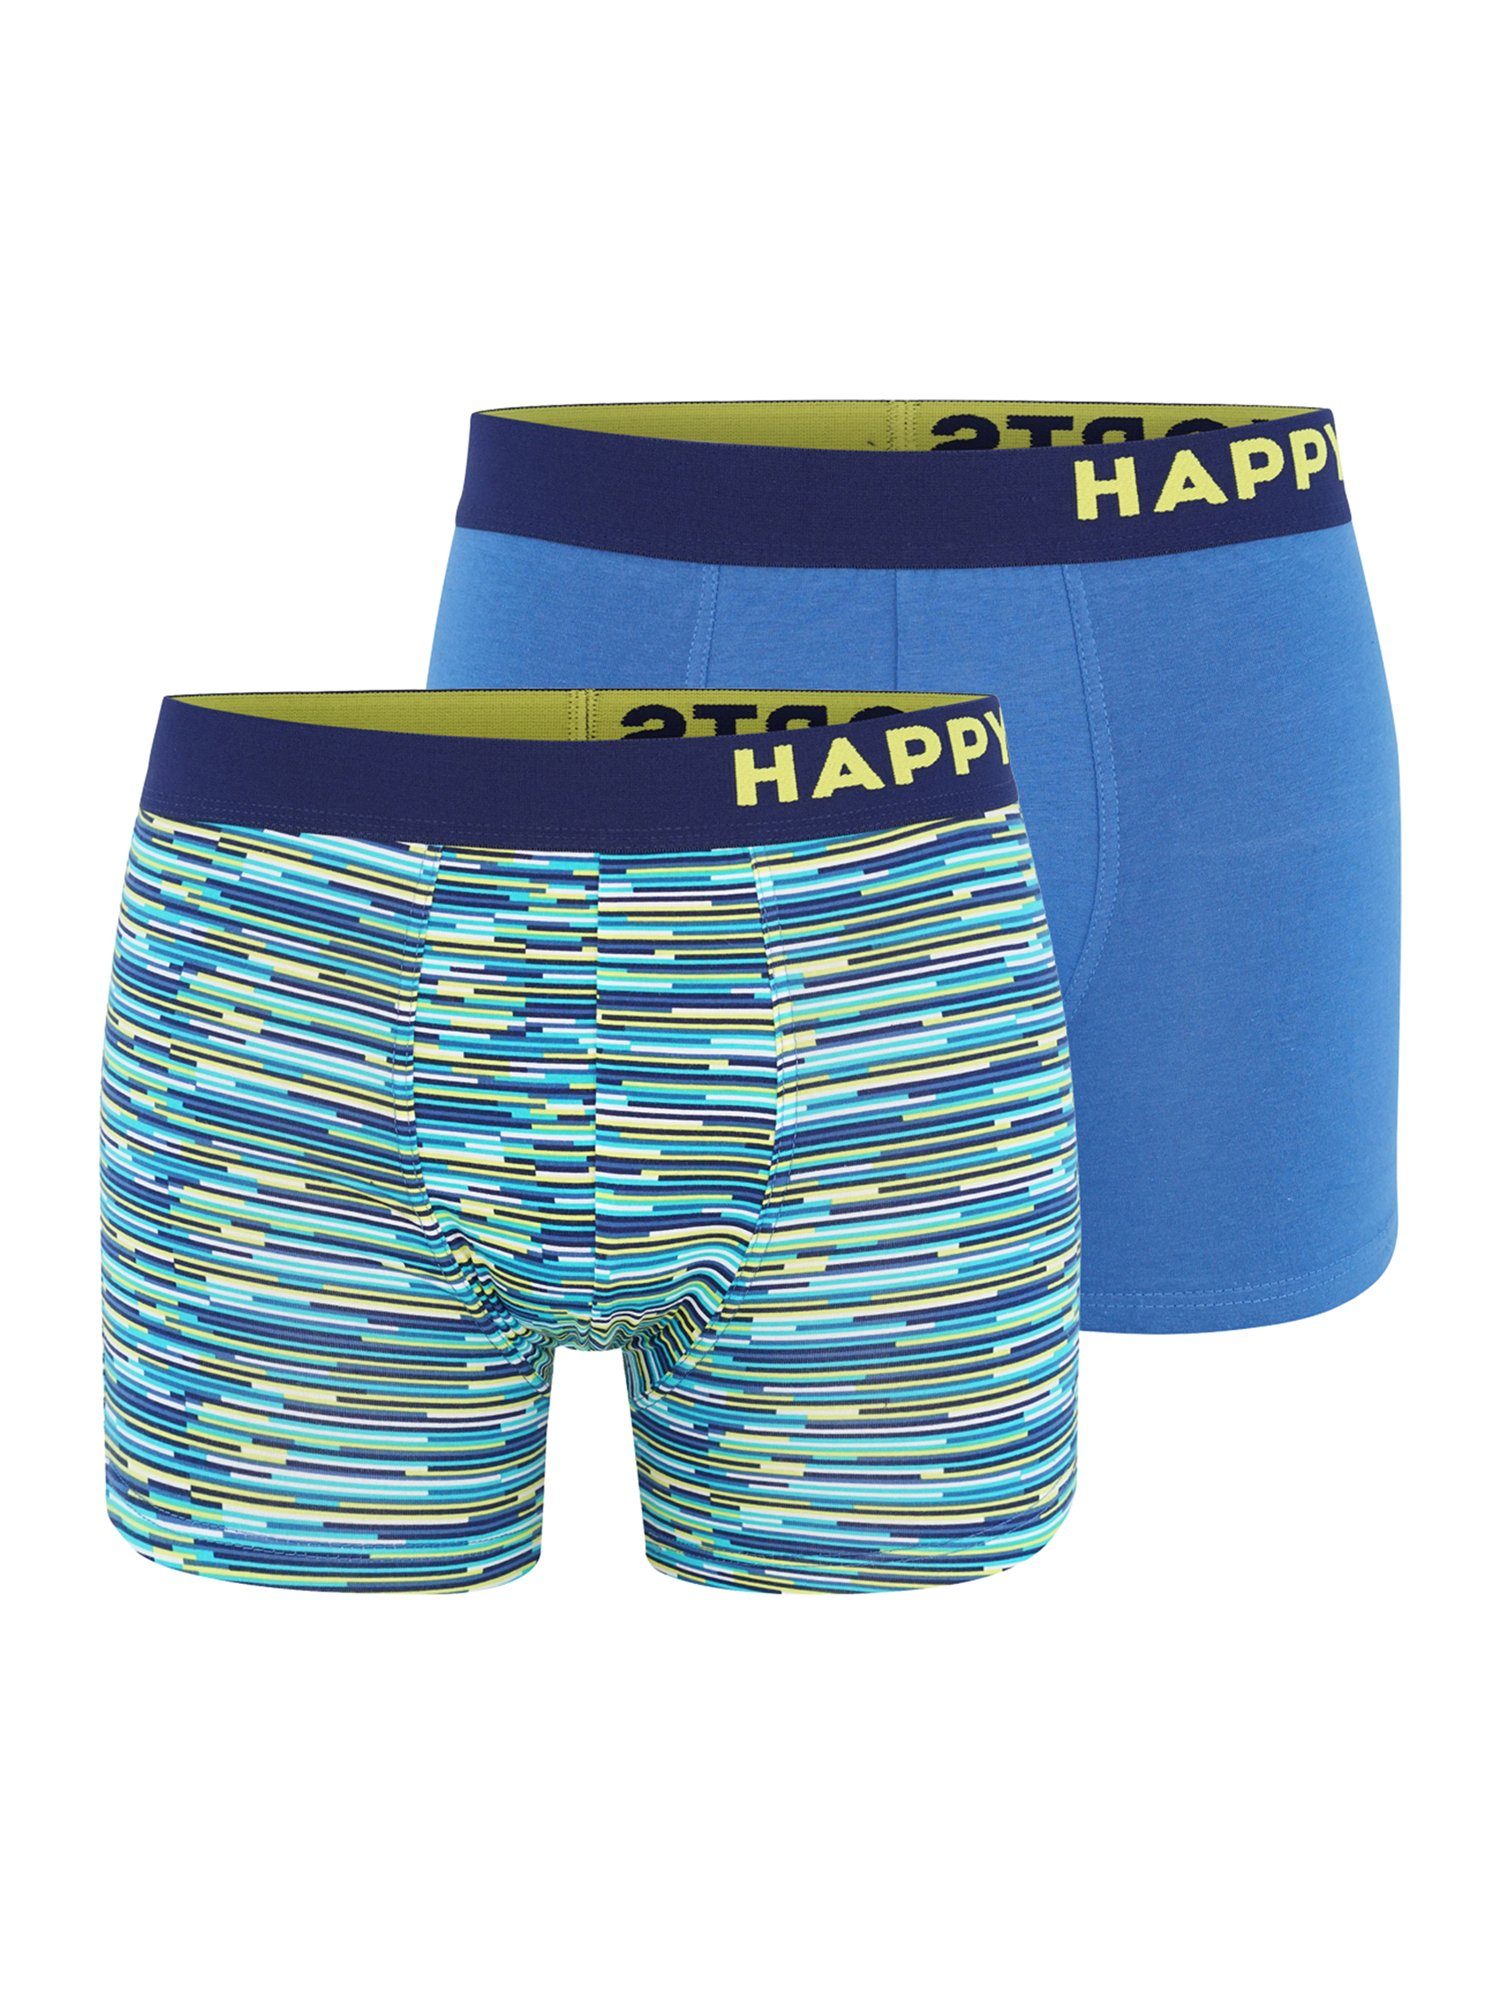 Pants Motivprint Stripes Retro Trunks Abstract HAPPY SHORTS